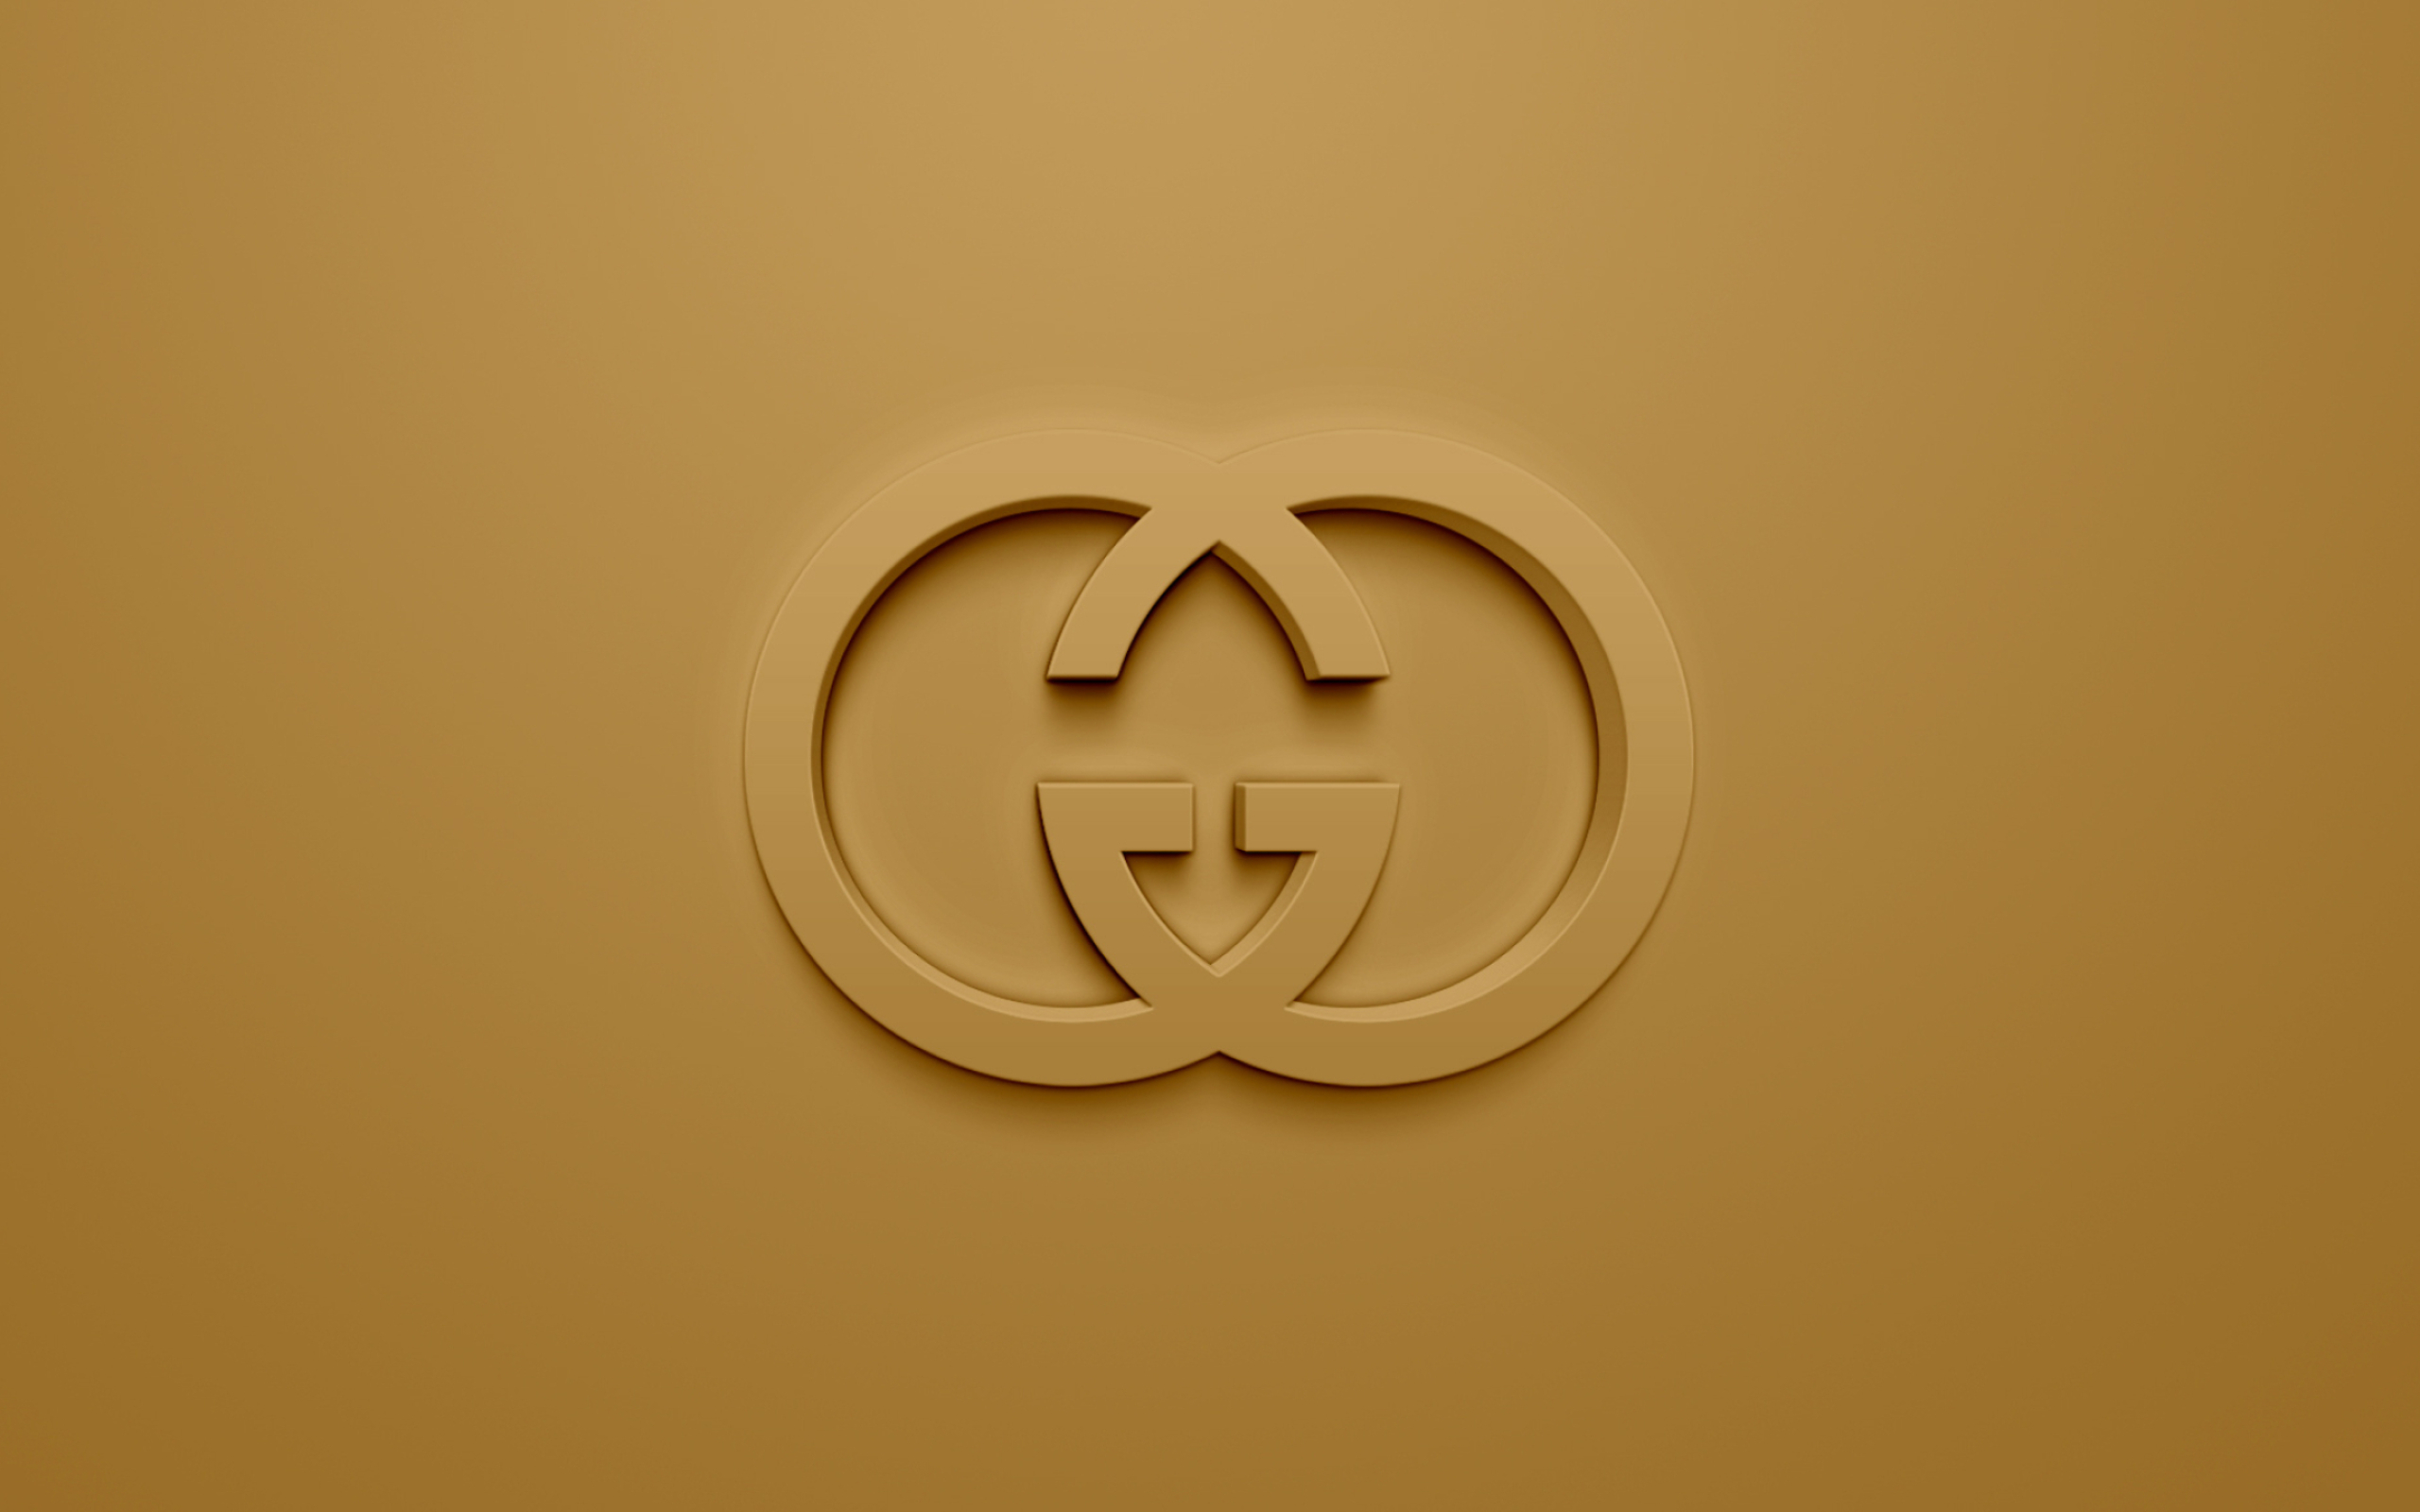 Gold Gucci logo wallpaper, 3D art, Luxury fashion brand, High quality images, 2560x1600 HD Desktop